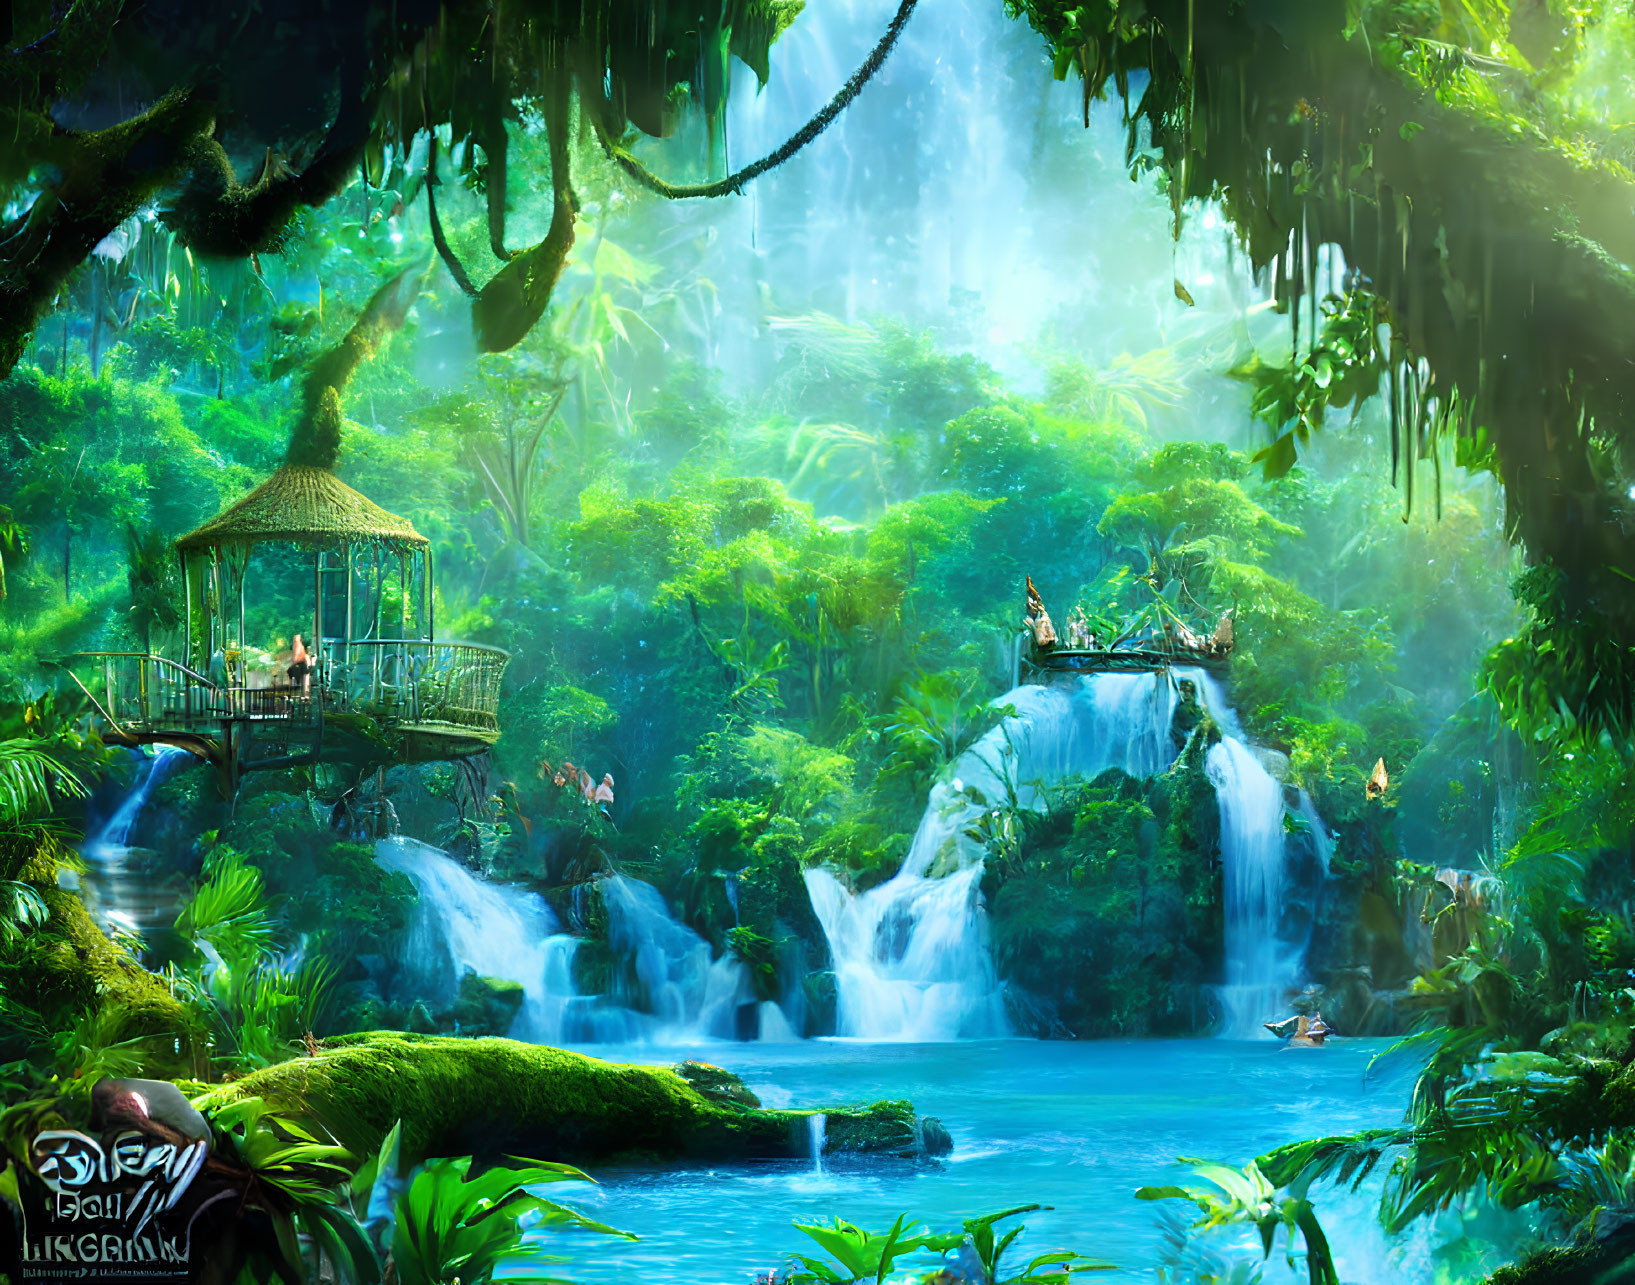 Lush Jungle Scene with Waterfalls, Blue Lagoon, Gazebo, and Human Presence